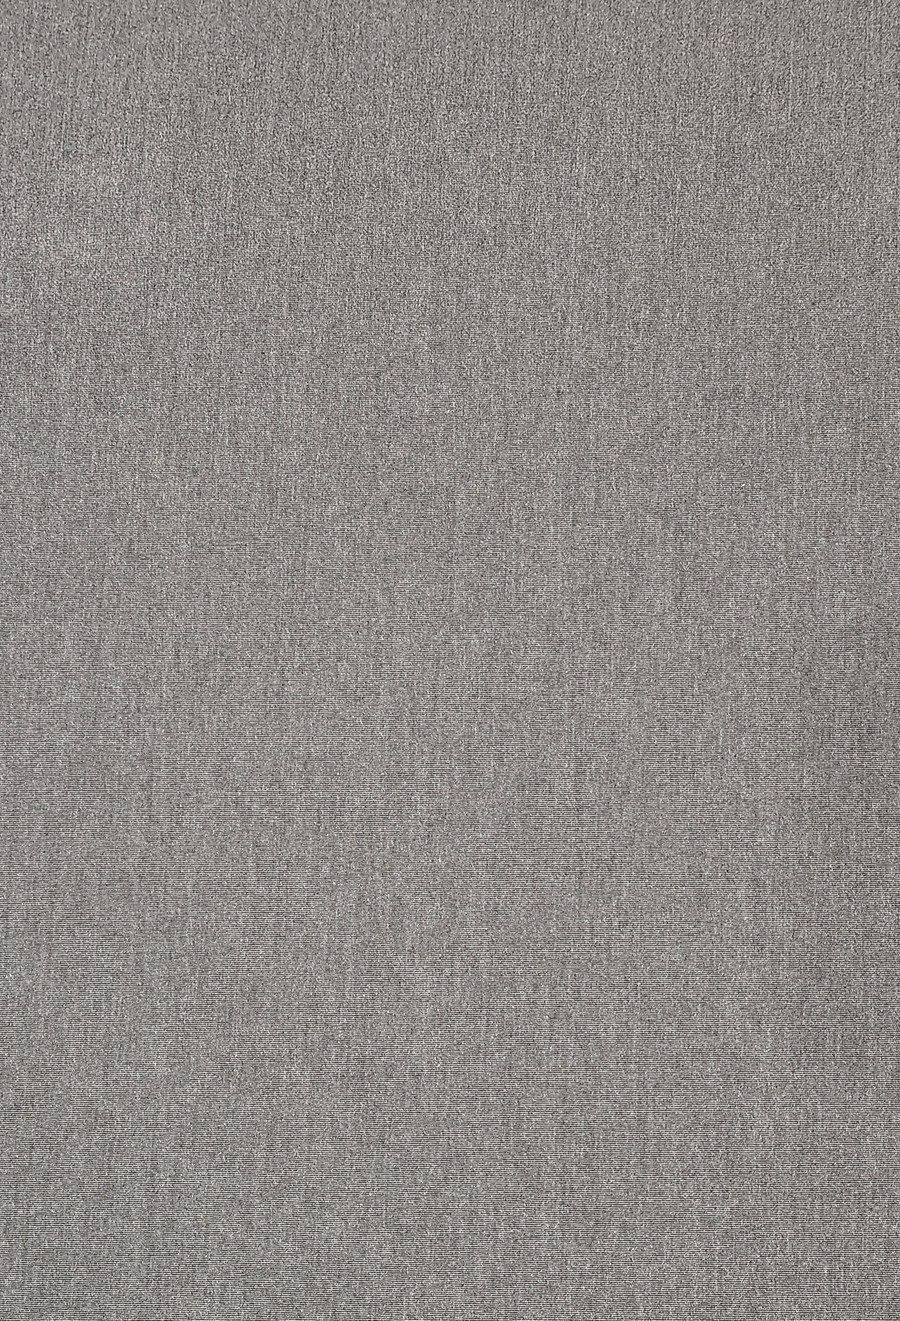 WESTPORT sunlounger squab in Dark Grey olefin outdoor fabric